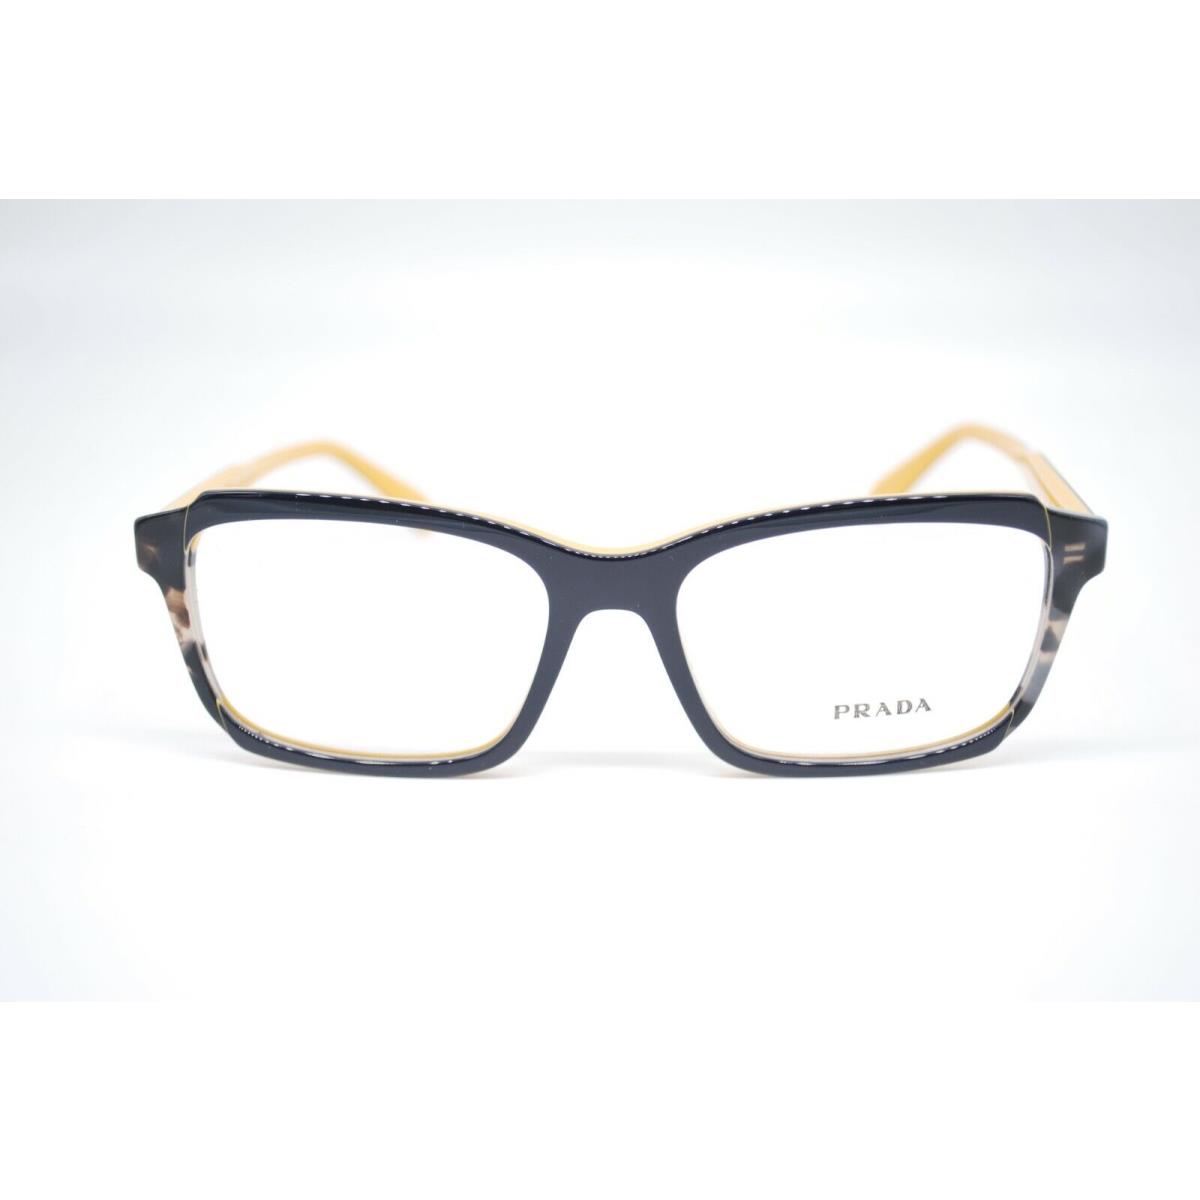 Prada eyeglasses VPR - BLACK AND ORANGE Frame 1